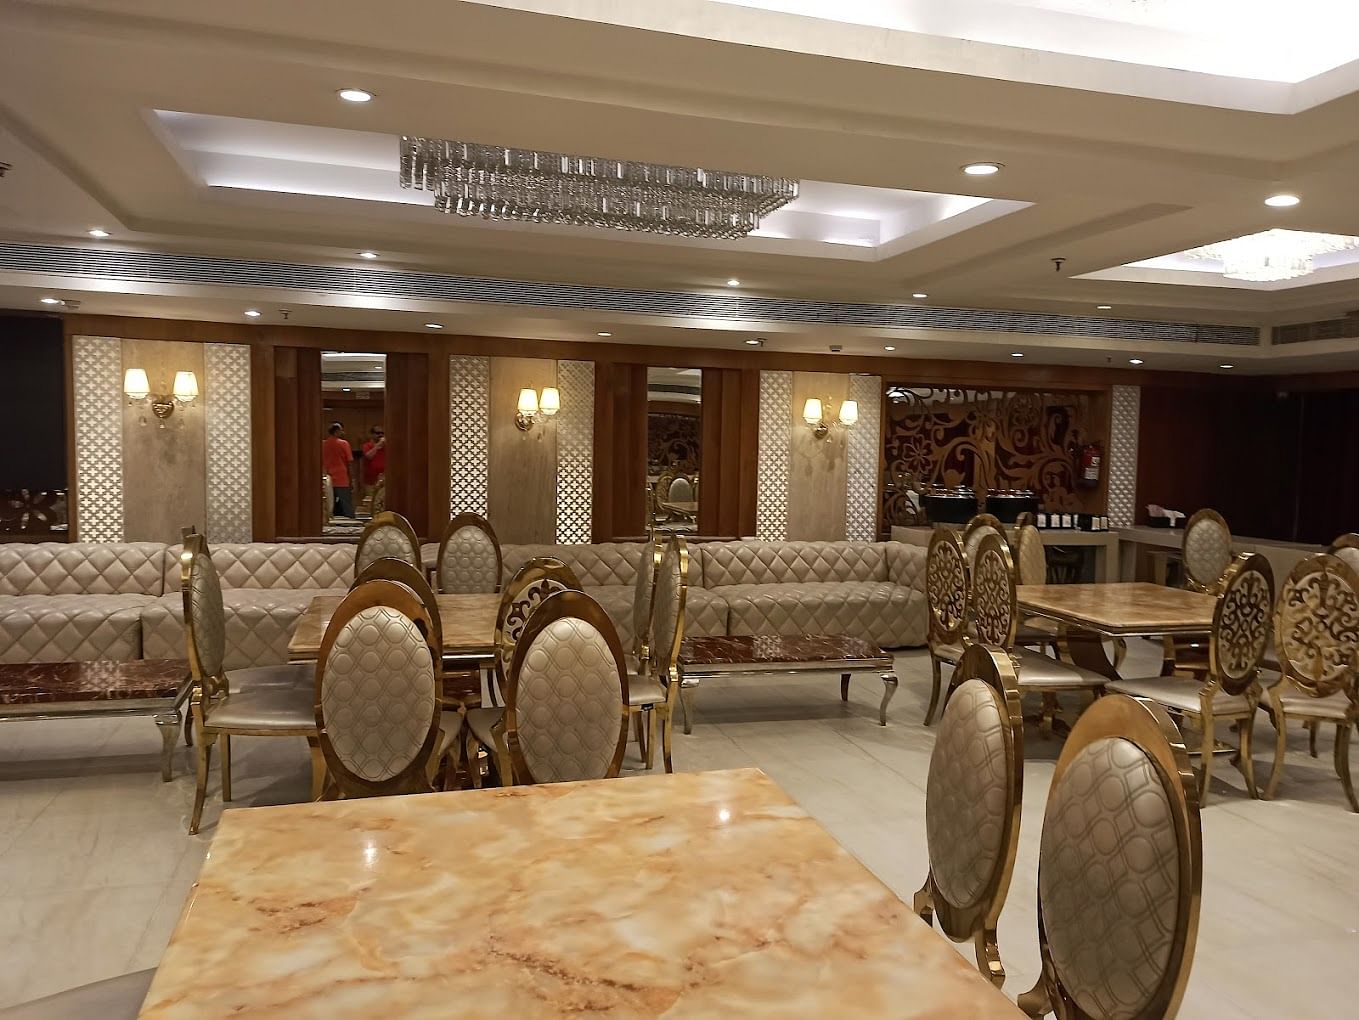 Hotel Surya Grand in Subhash Nagar, Delhi